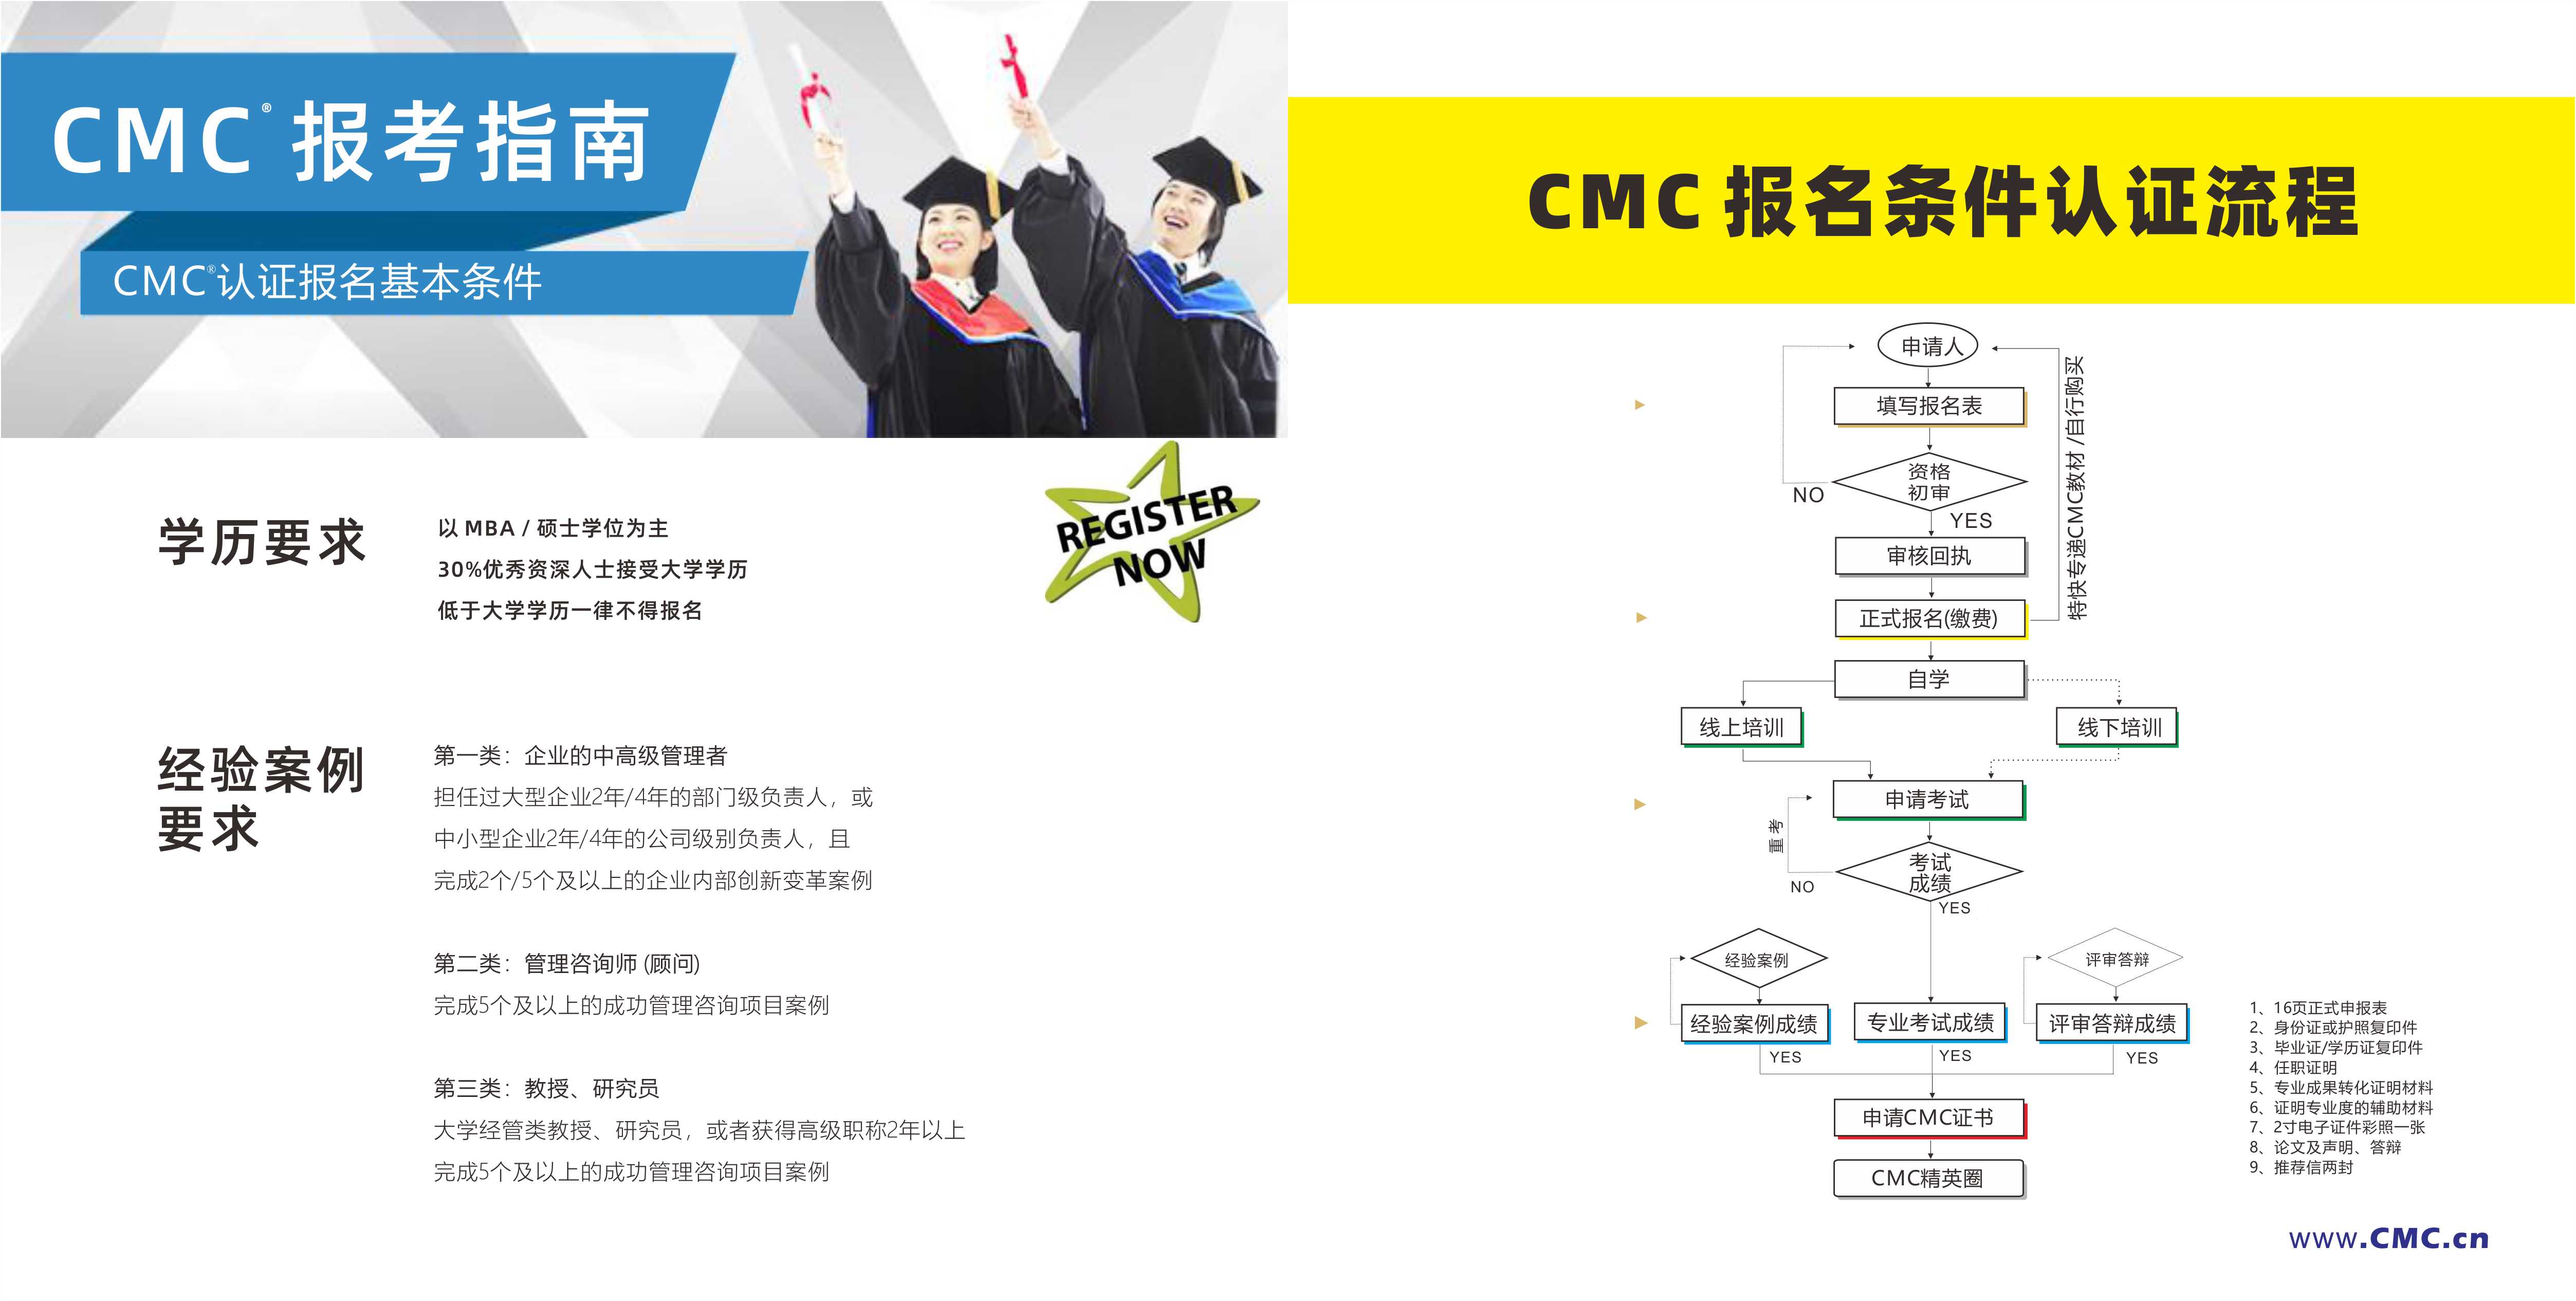 CMC国际注册管理师招生简介21-22